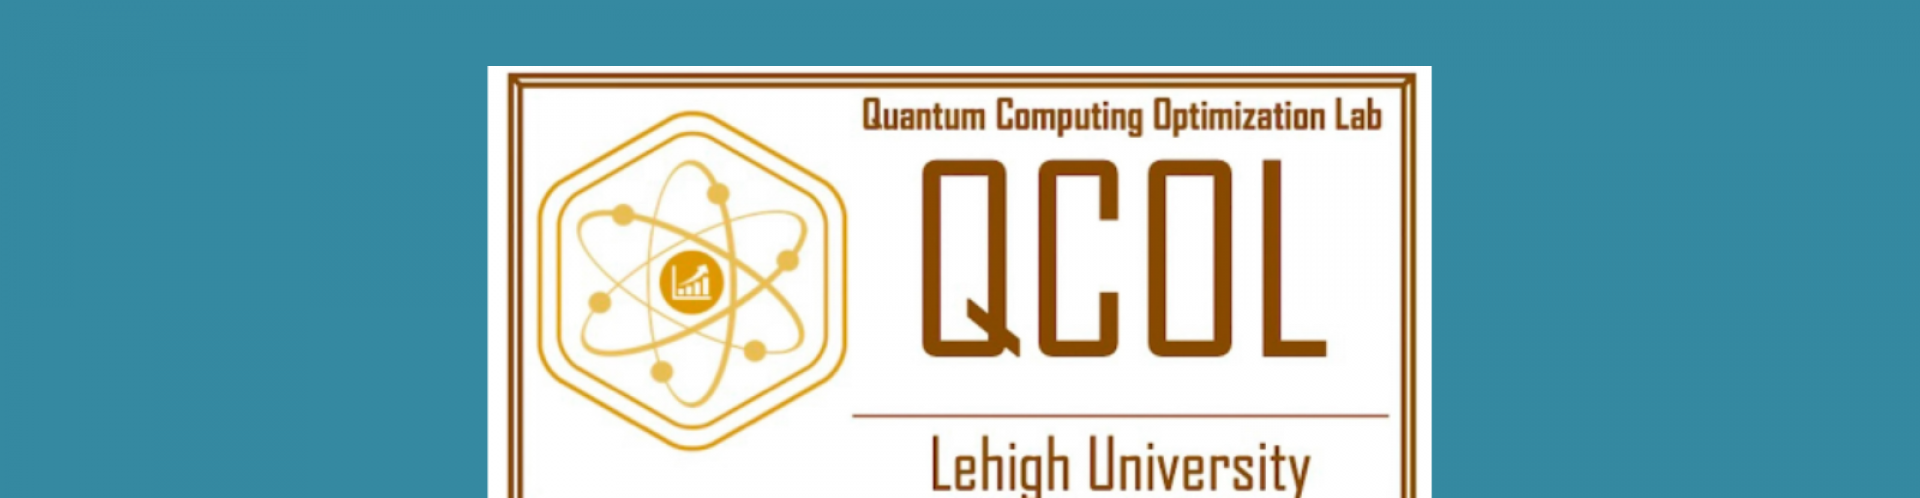 QCOL Logo